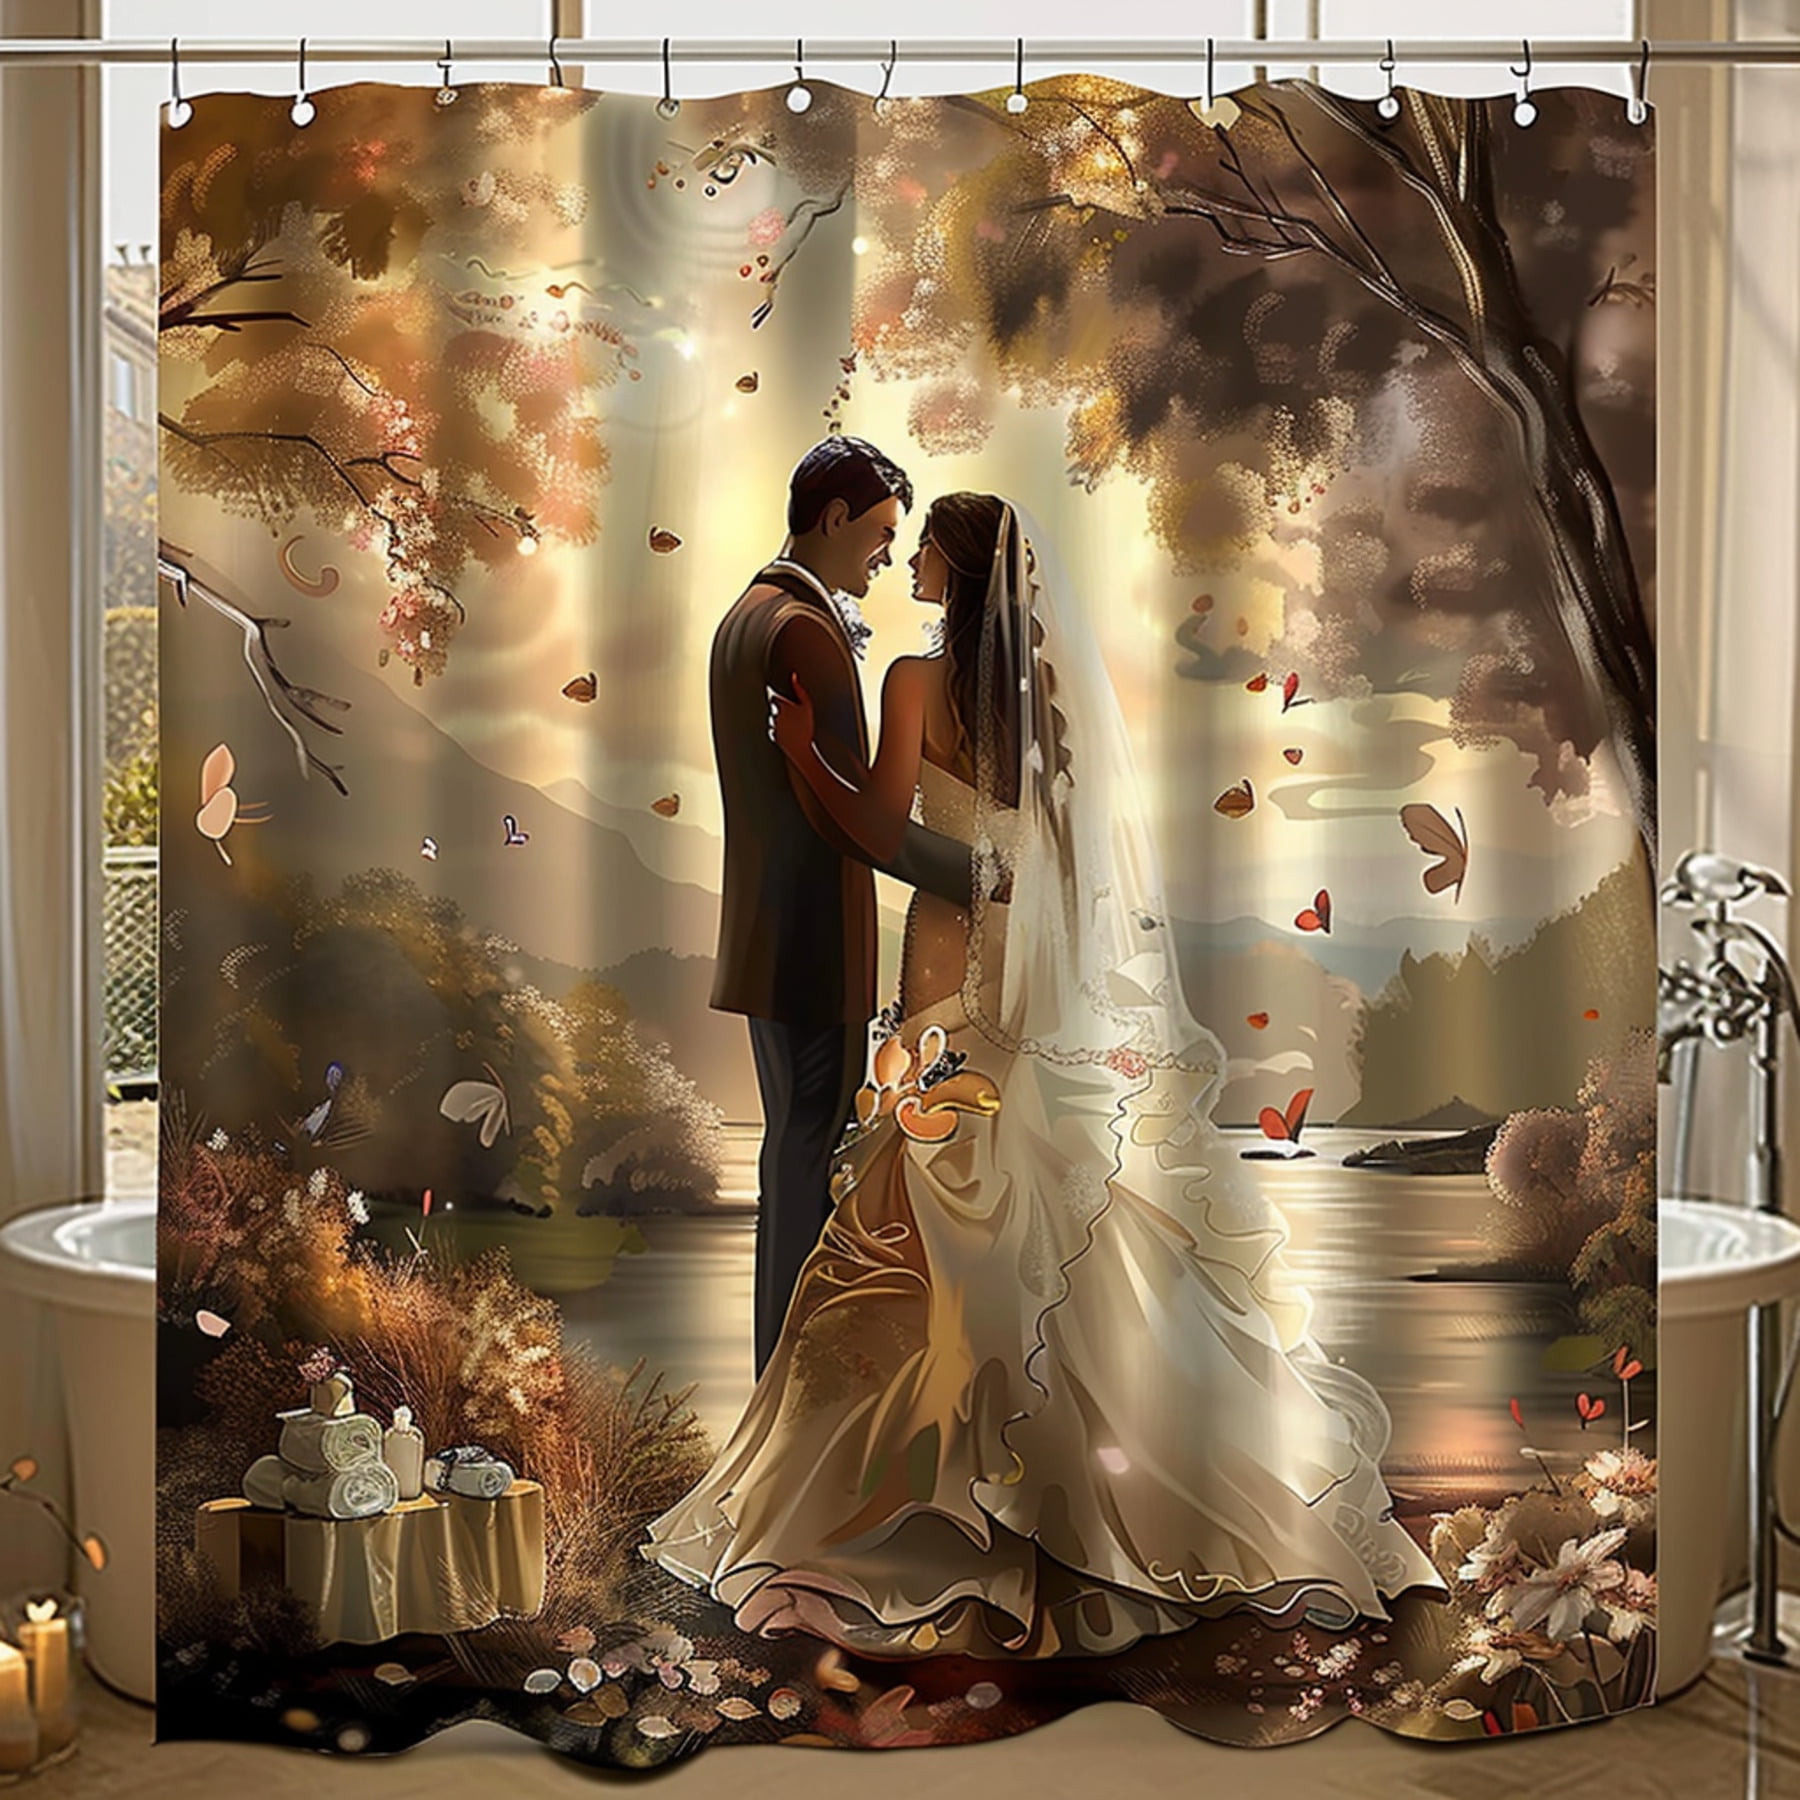 Highquality weddingthemed shower curtain featuring a soft romantic ...